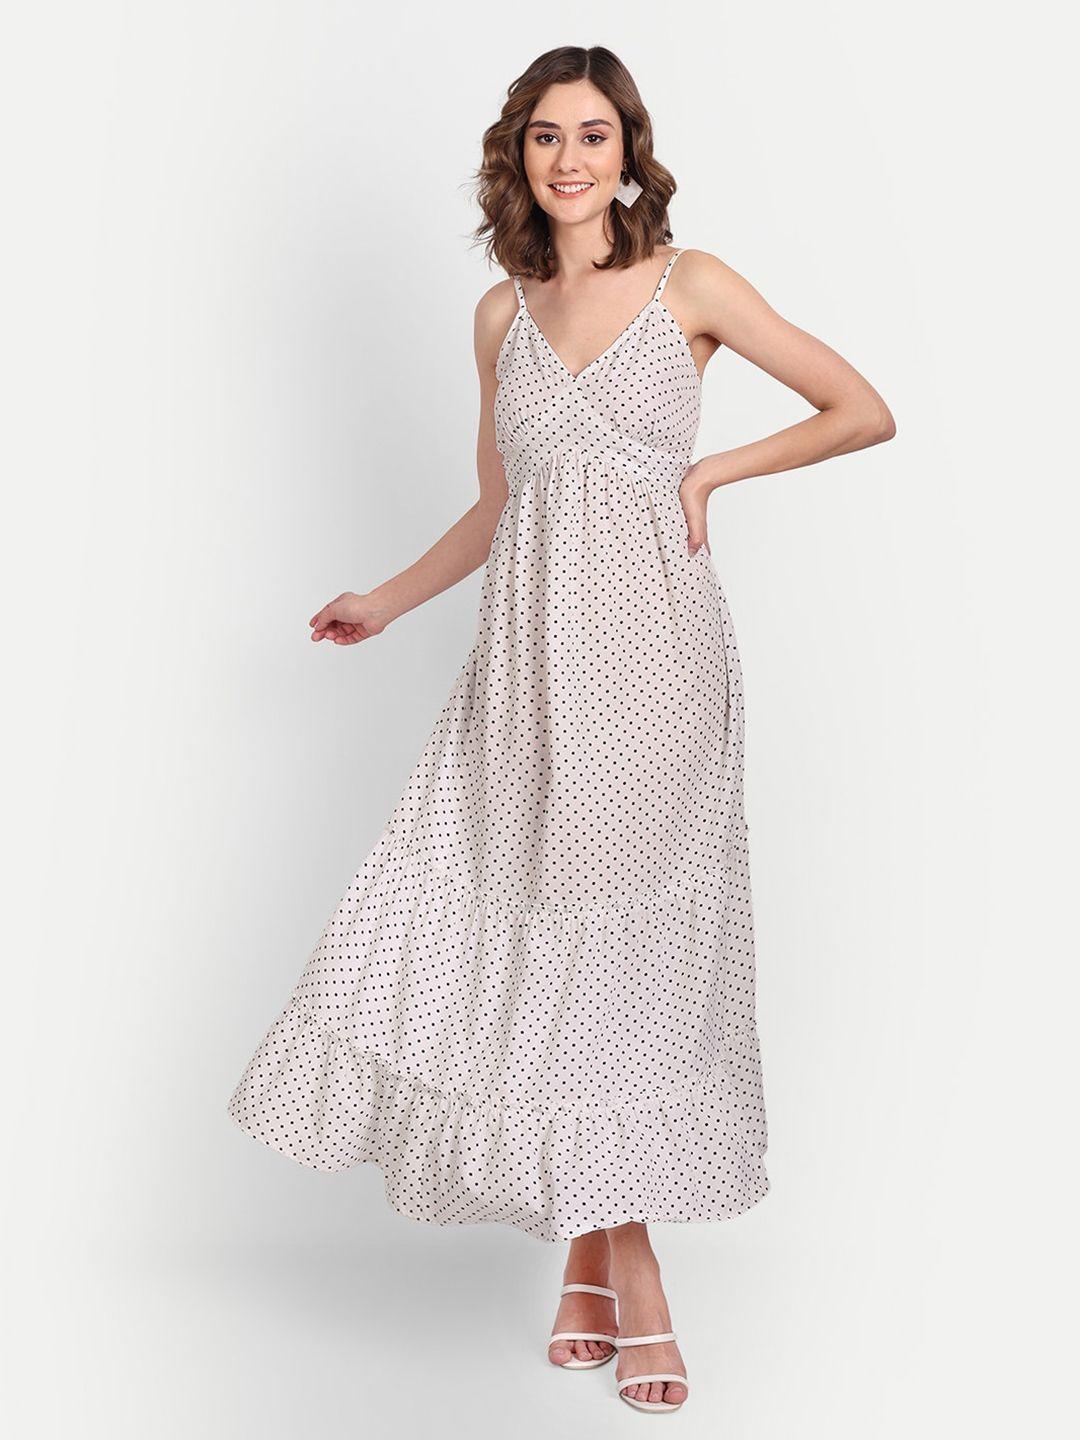 essque polka dots printed emipre dress